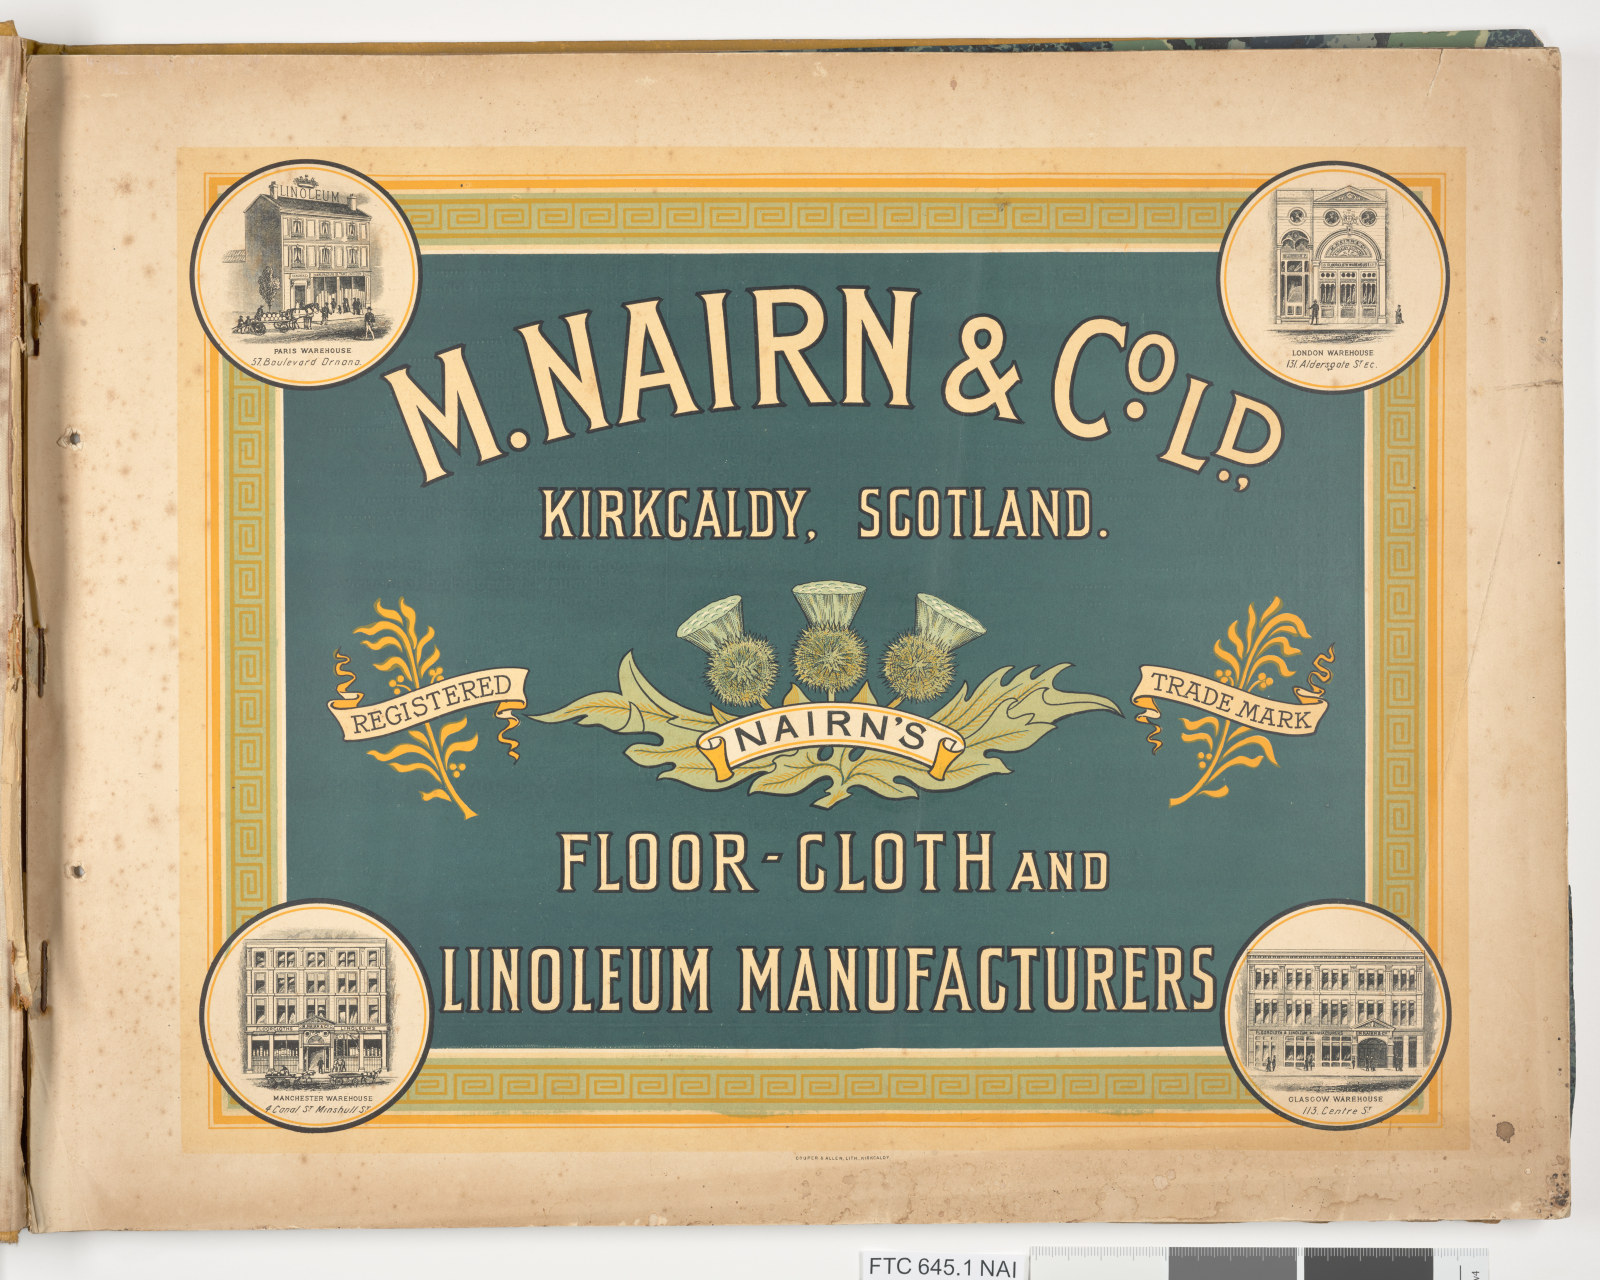 Nairn's inlaid linoleum : "tile & carpet" 1898-99 / M. Nairn & C. Ltd. [trade catalogue]